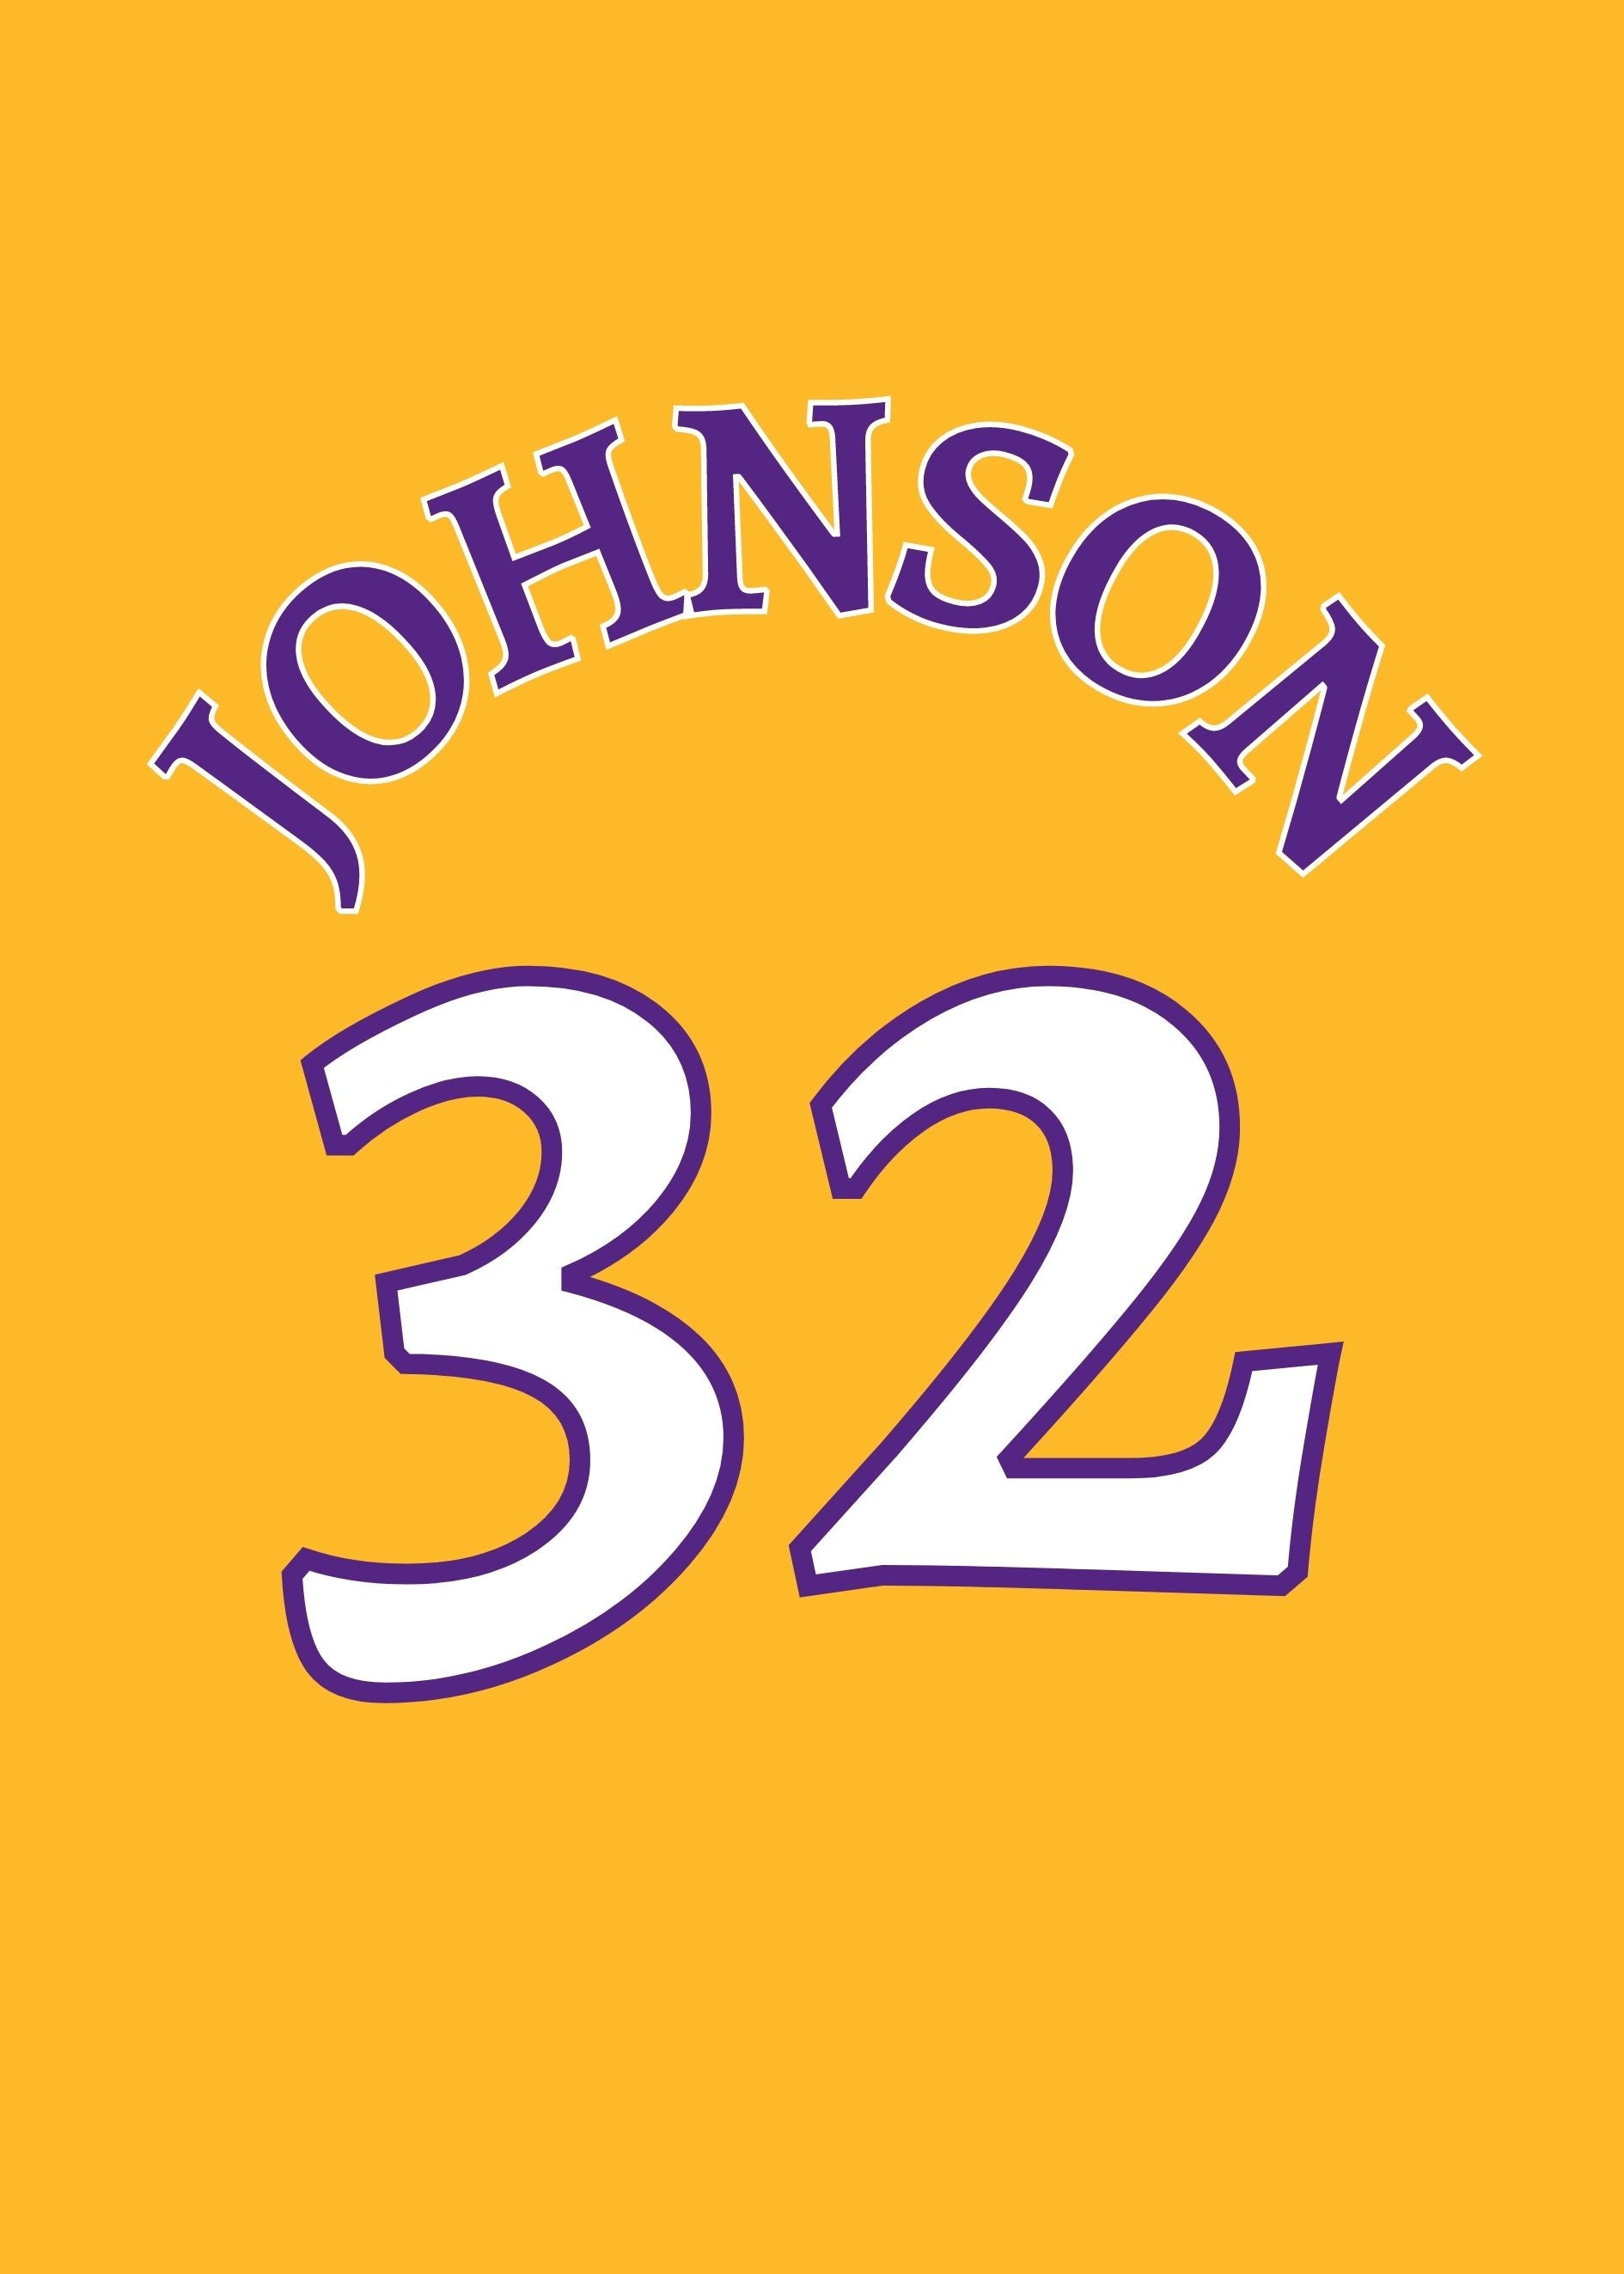 Johnson Lakers poster